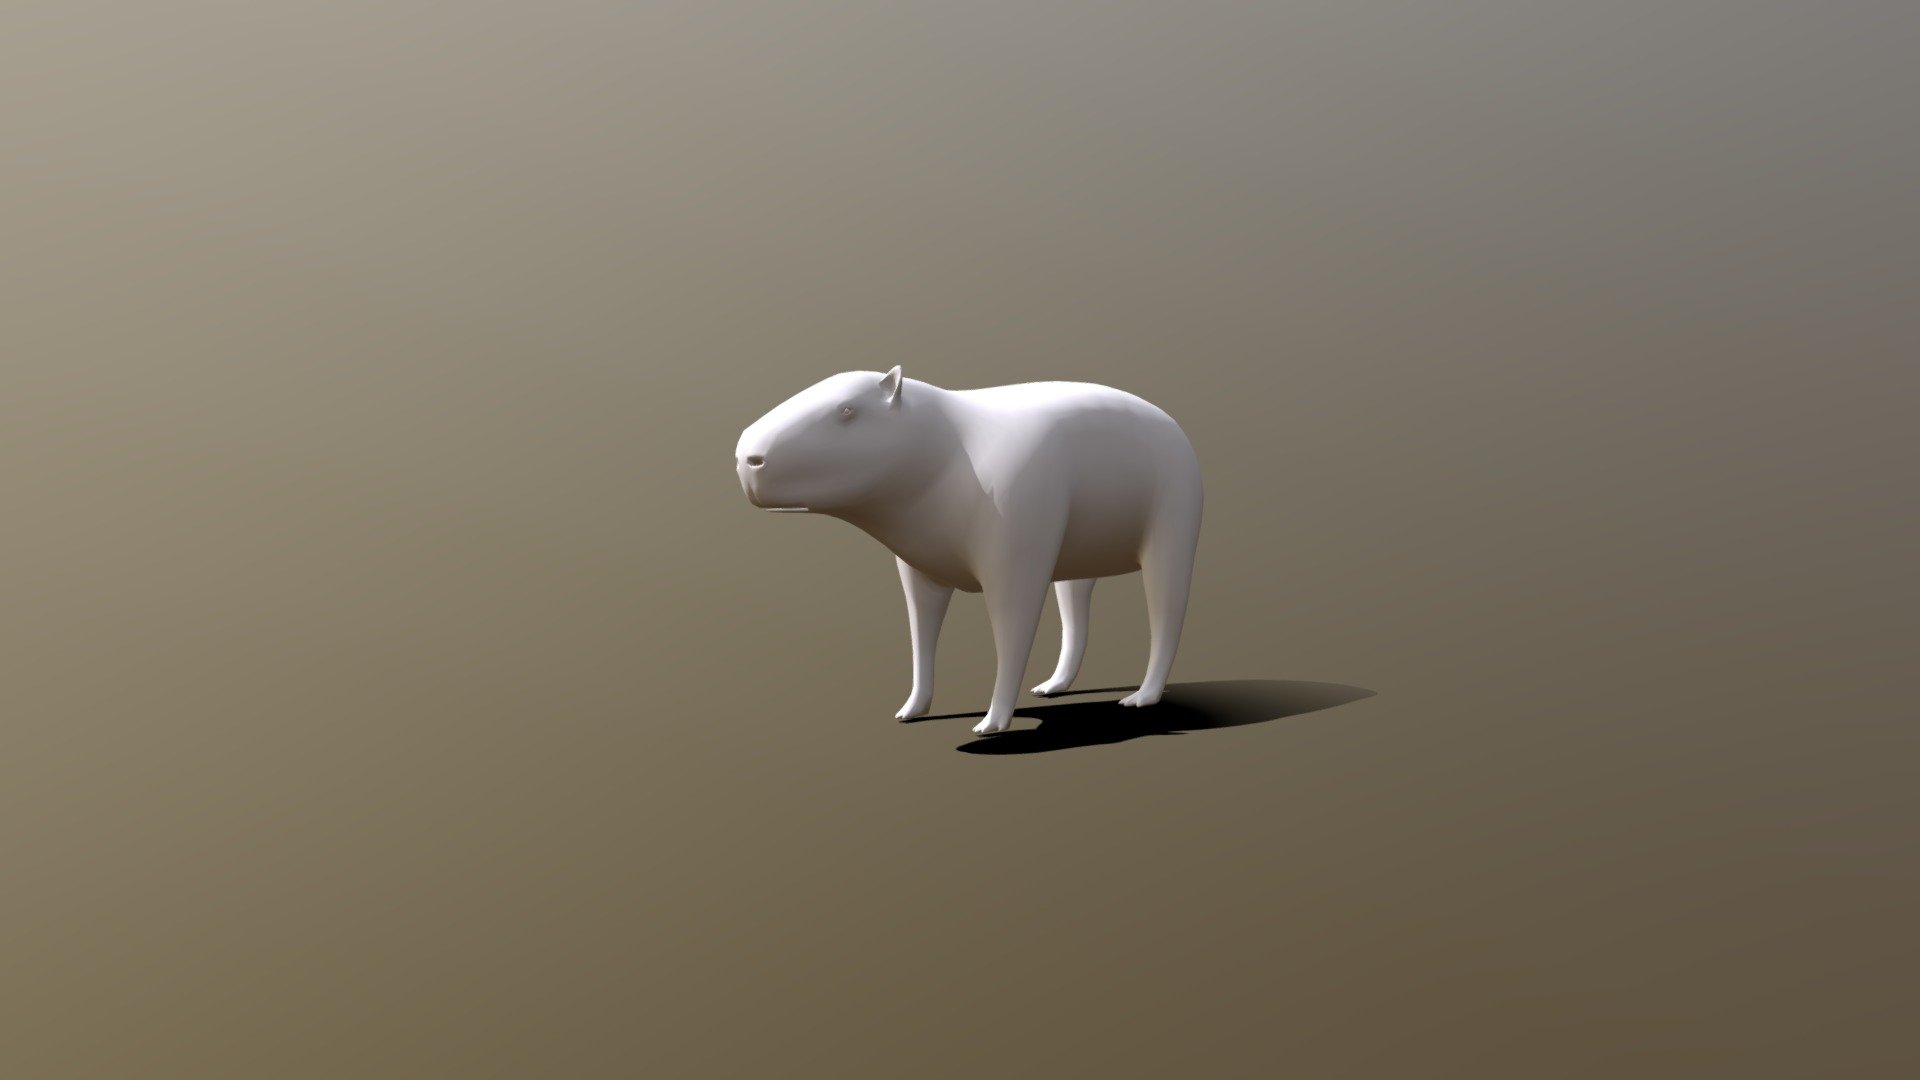 Capibara made in blender 2.8 - Capibara - 3D model by marta.cumillaf 3d model